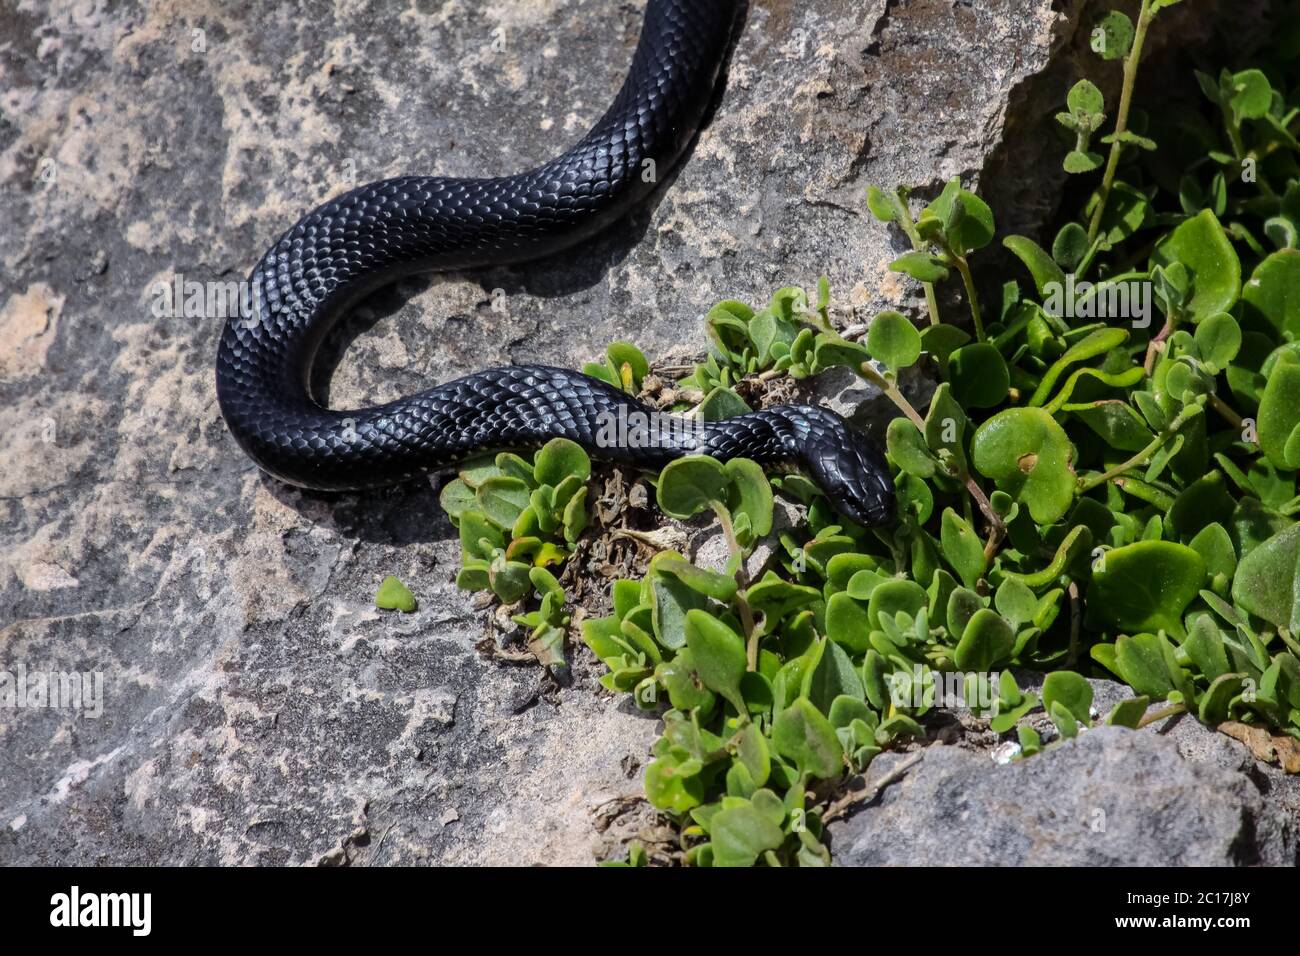 Close up of a dangerous Black tiger snake in natural habitat, Kangaroo Island, South Australia Stock Photo